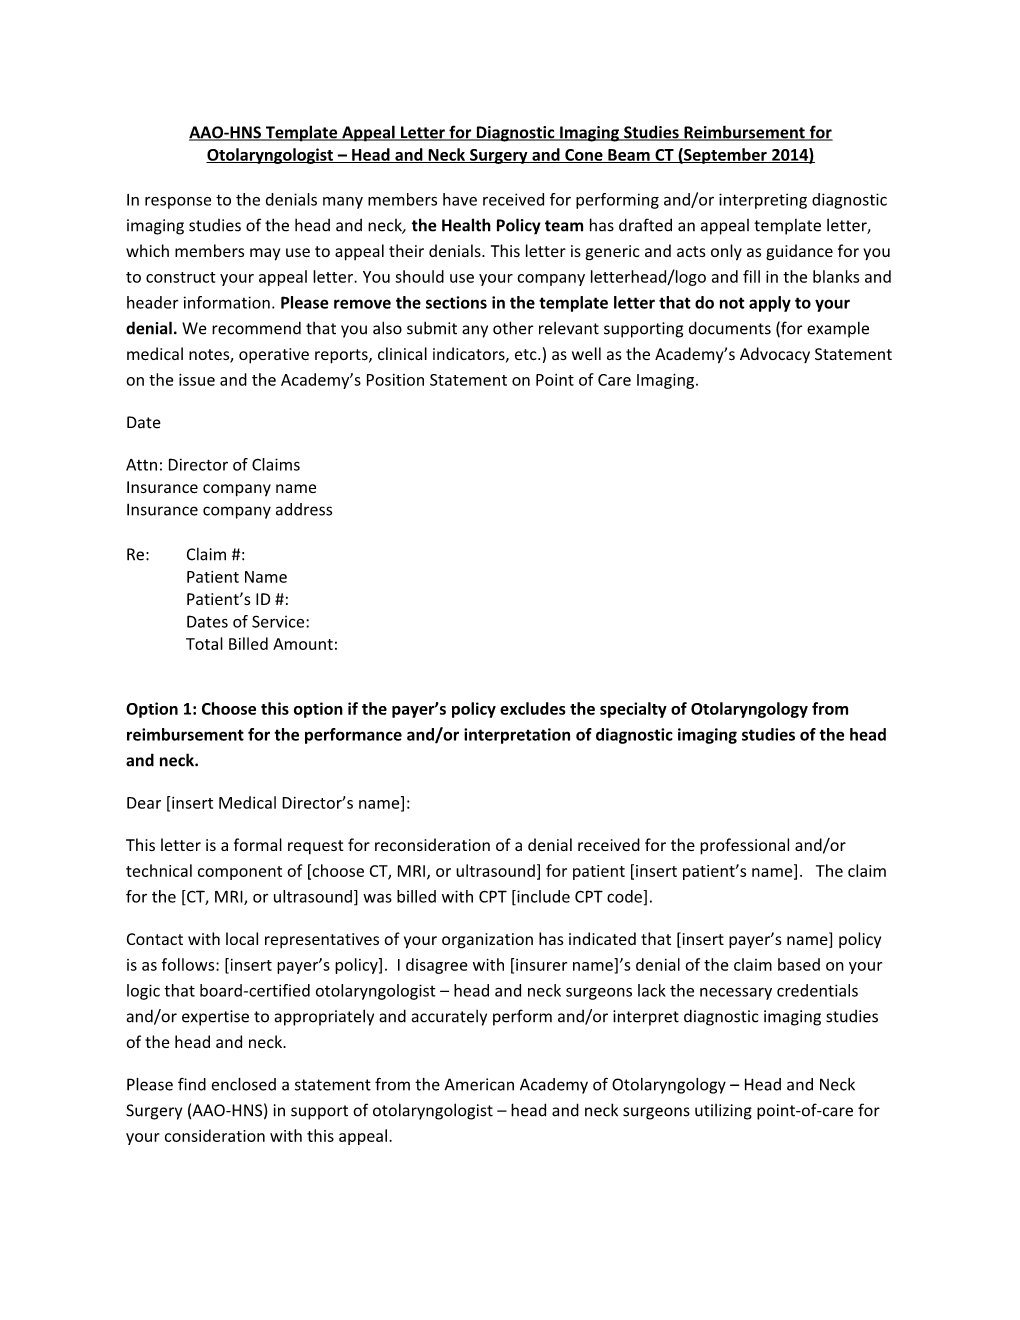 AAO-HNS Template Appeal Letter for Diagnostic Imaging Studies Reimbursement For